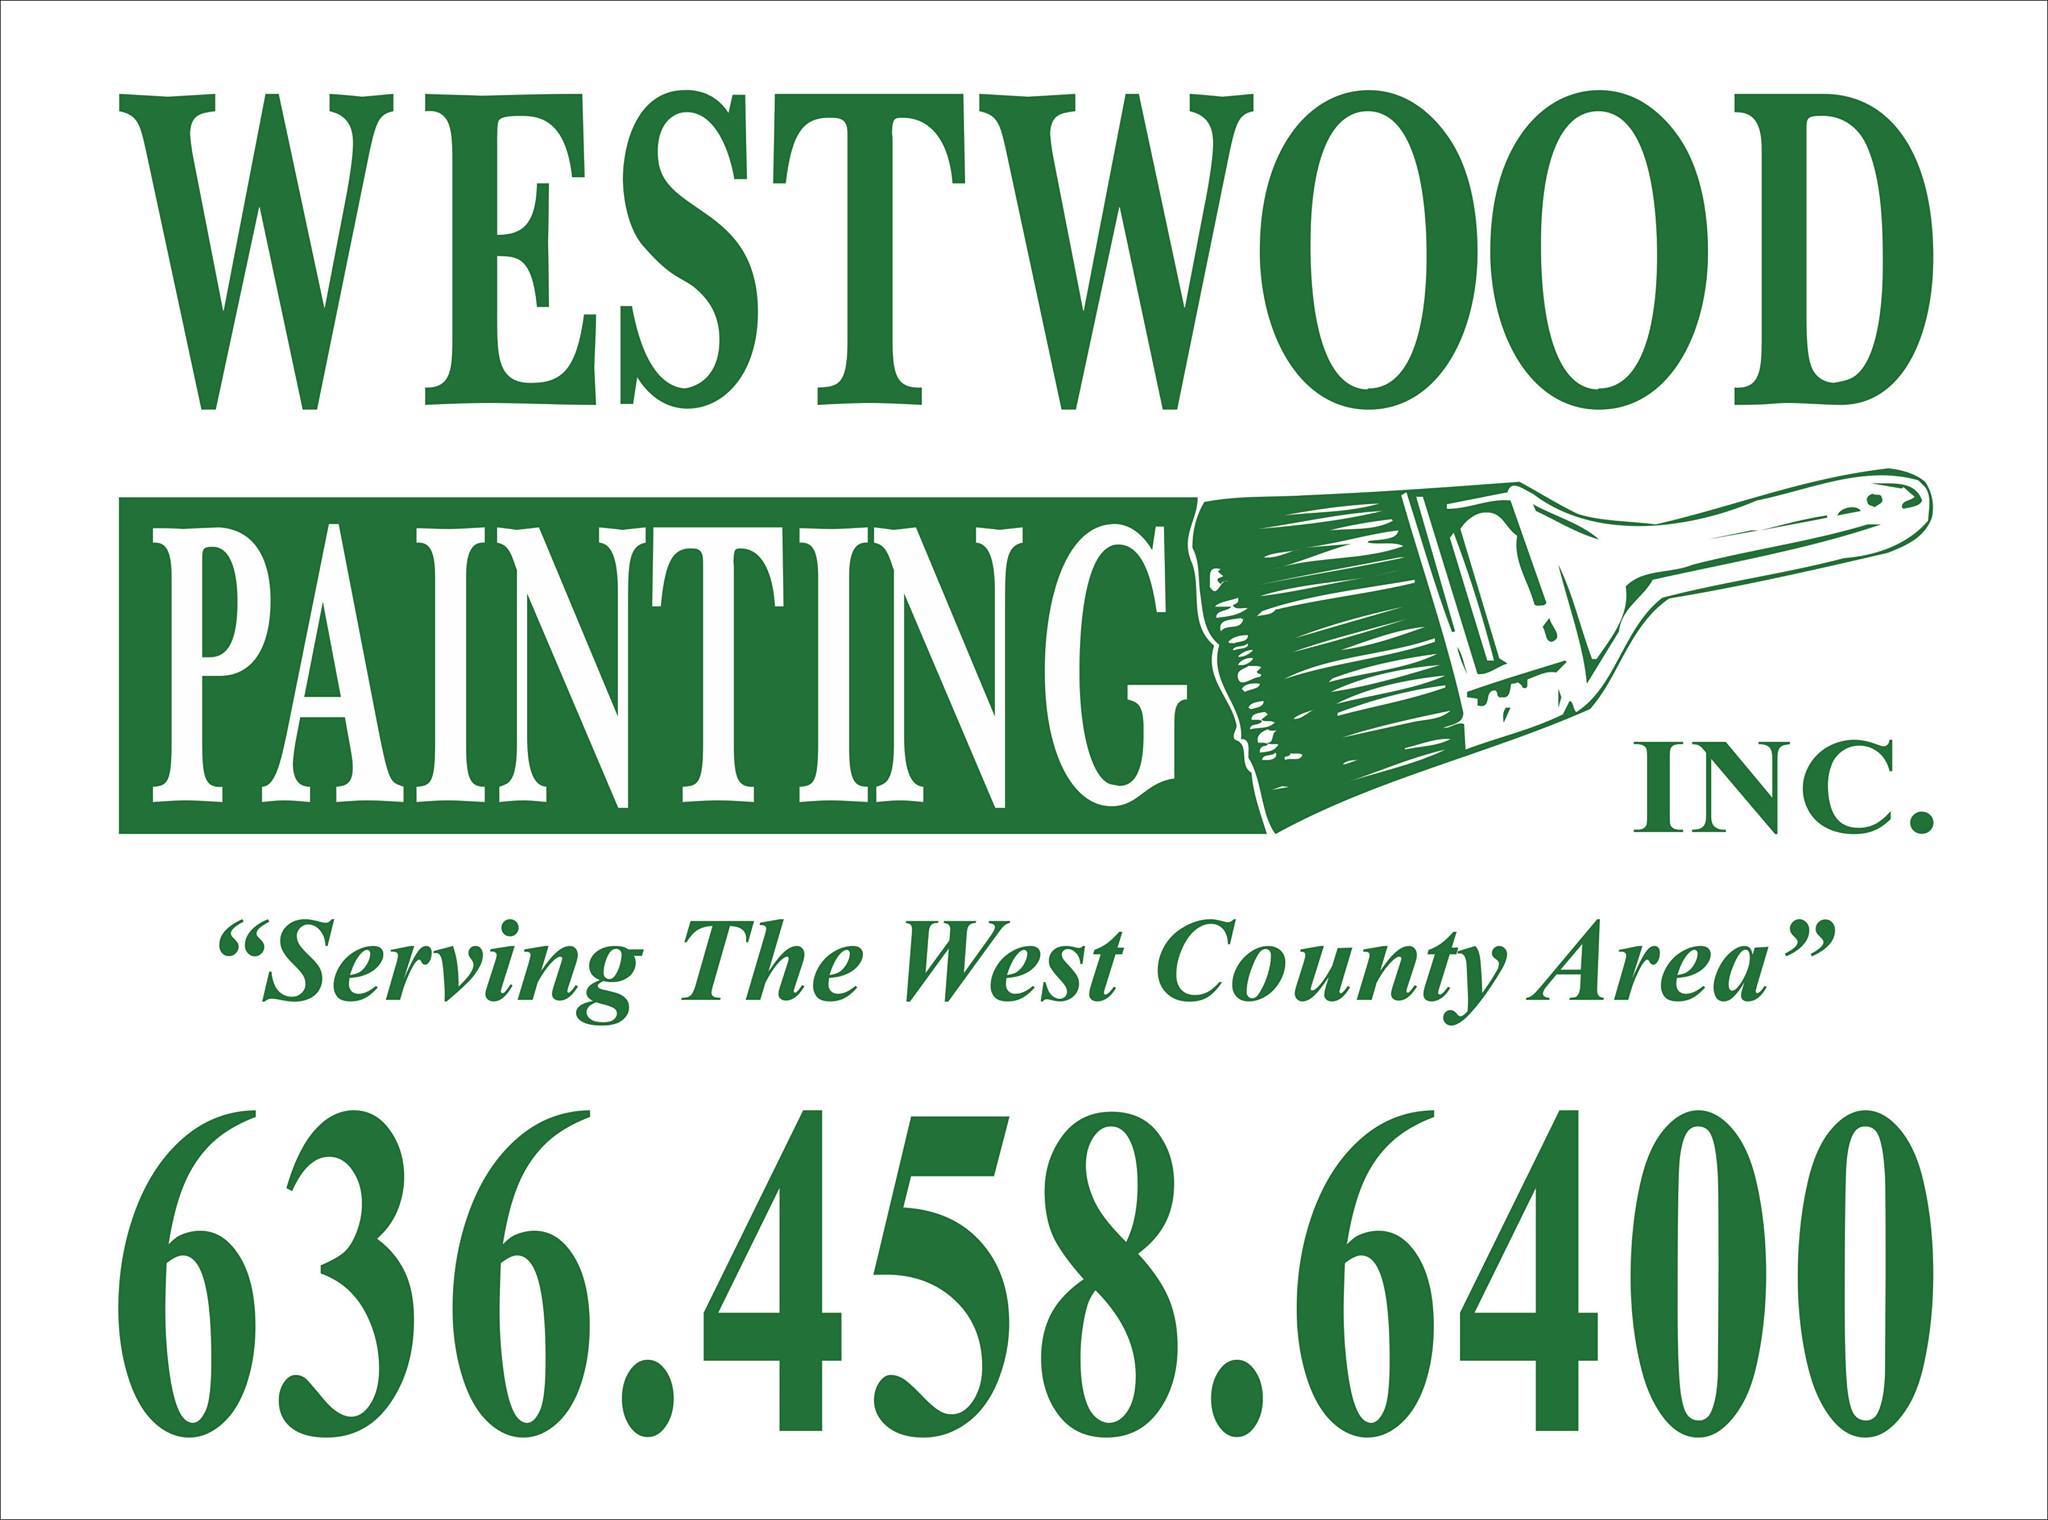 Westwood Painting, Inc. 2464 Taylor Rd suite 126, Wildwood Missouri 63040